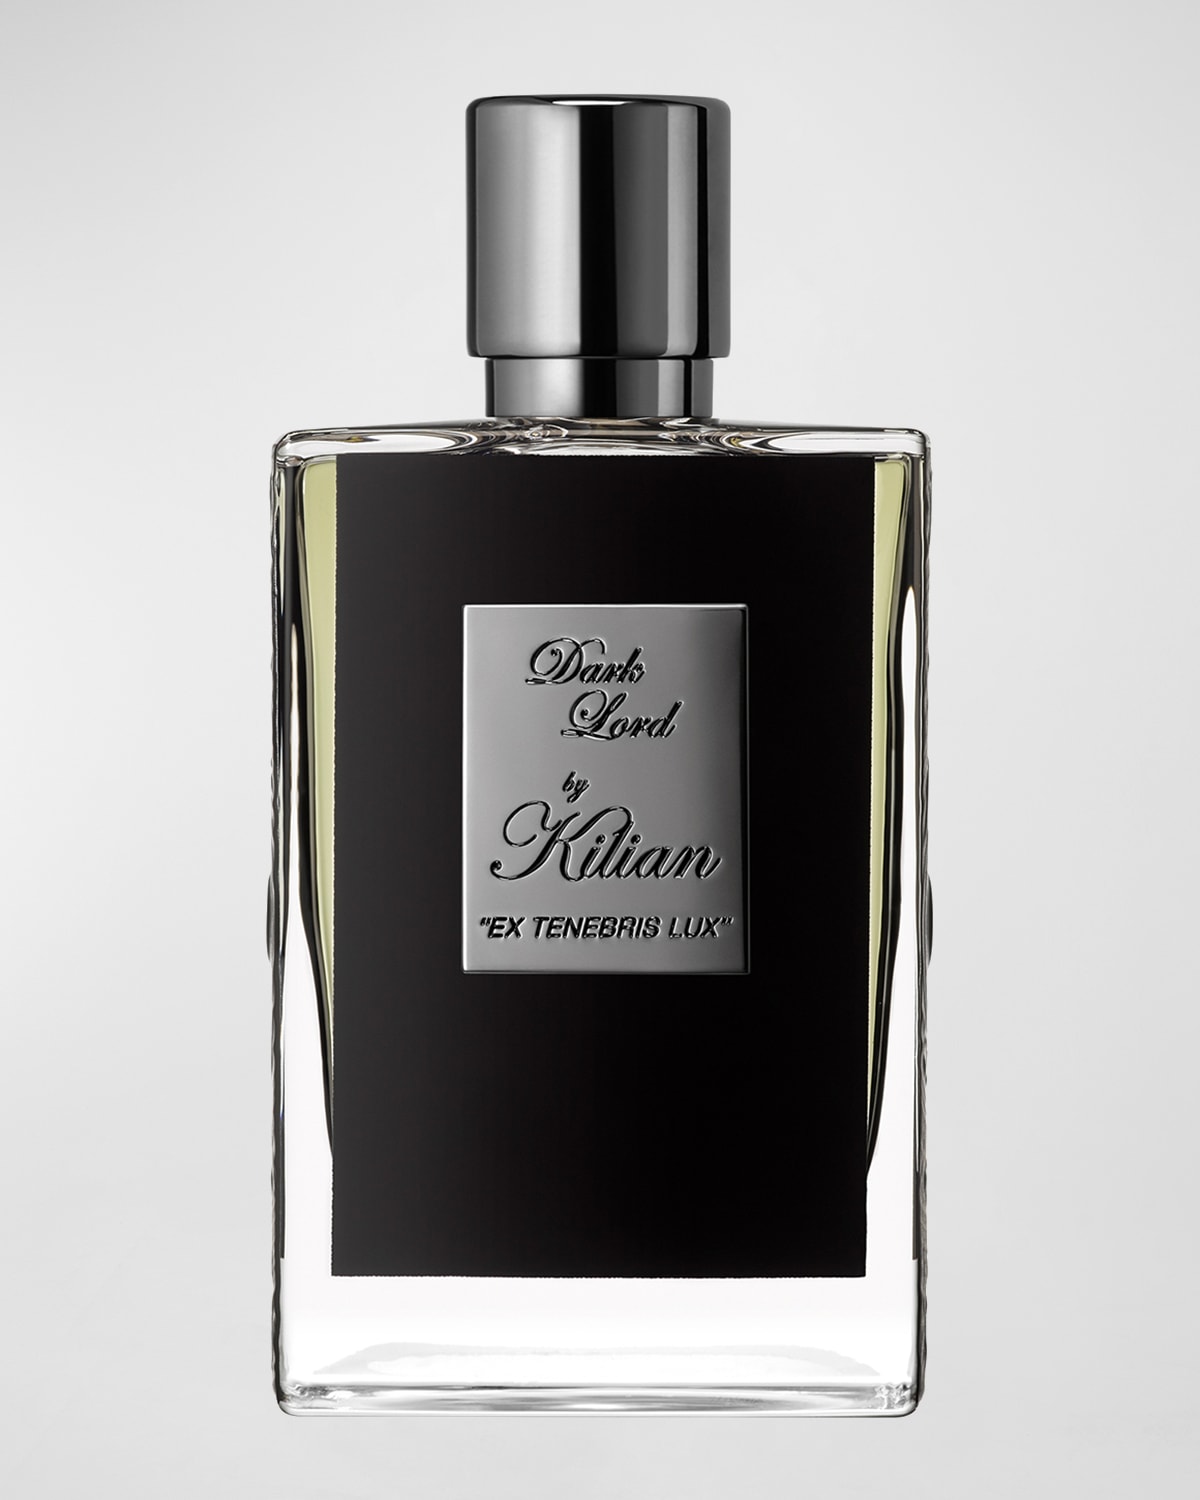 Kilian Dark Lord, Ex Tenebris Lux Eau de Parfum, 1.7 oz./ 50 mL